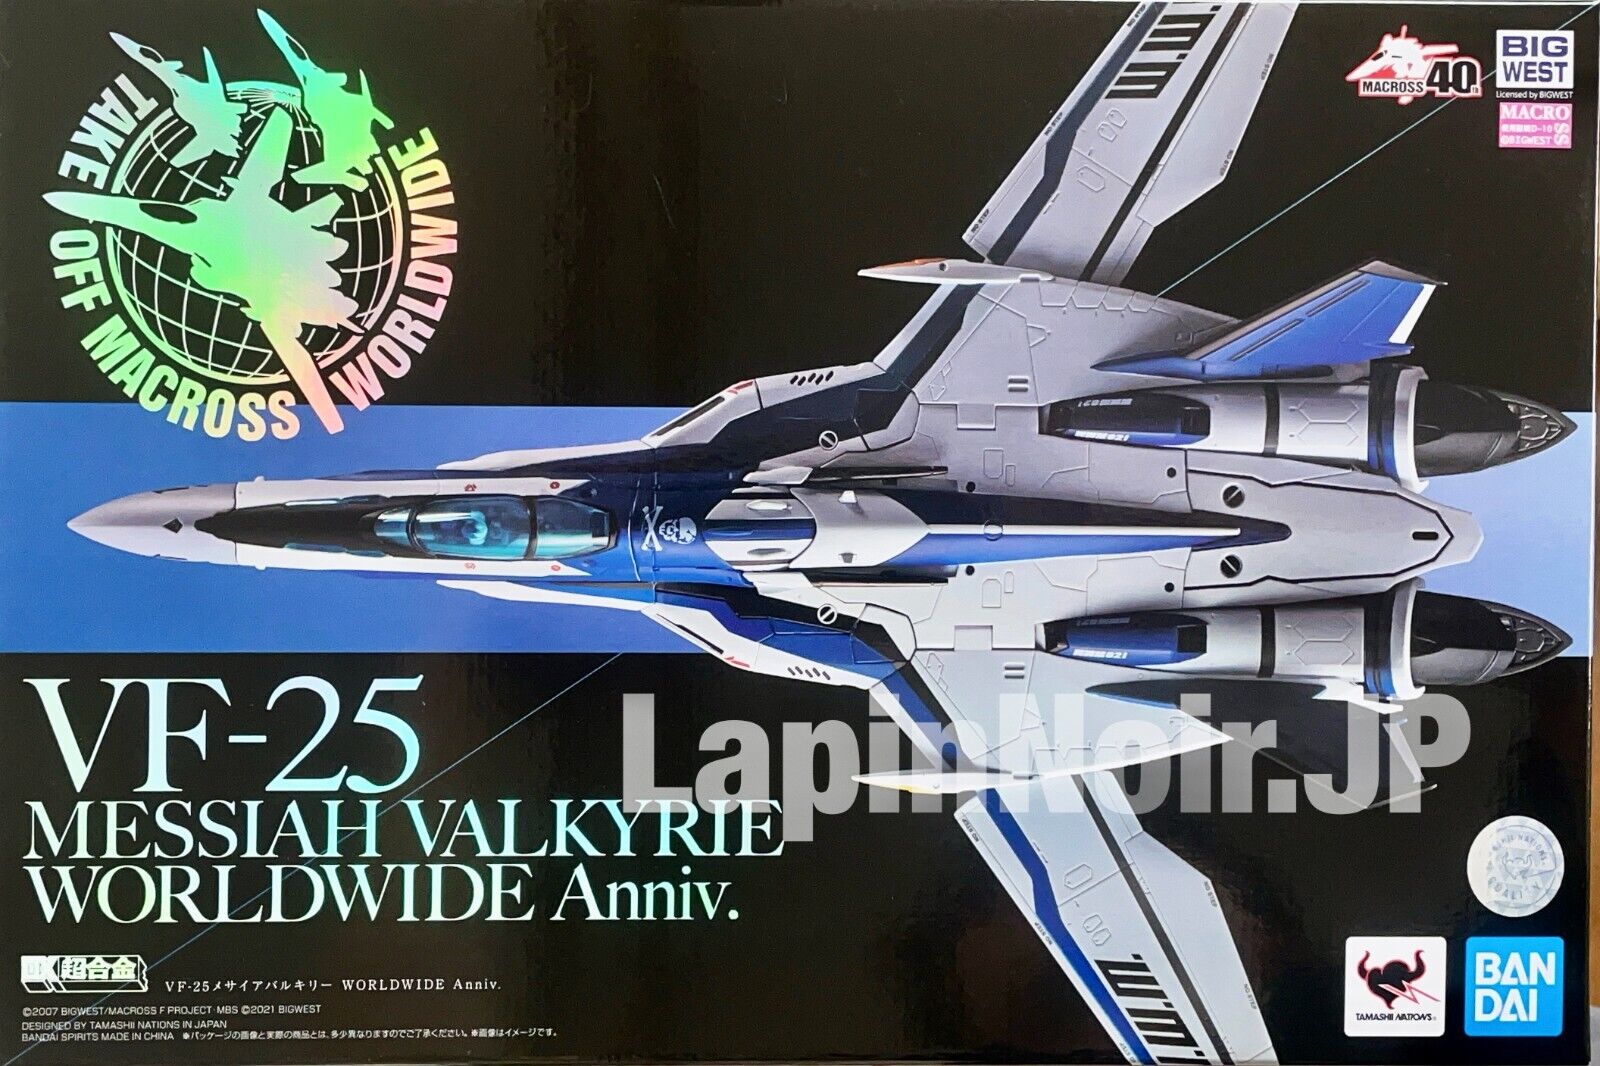 Macross figure DX Chogokin VF-25 Messiah Valkyrie WORLDWIDE Anniv BANDAI